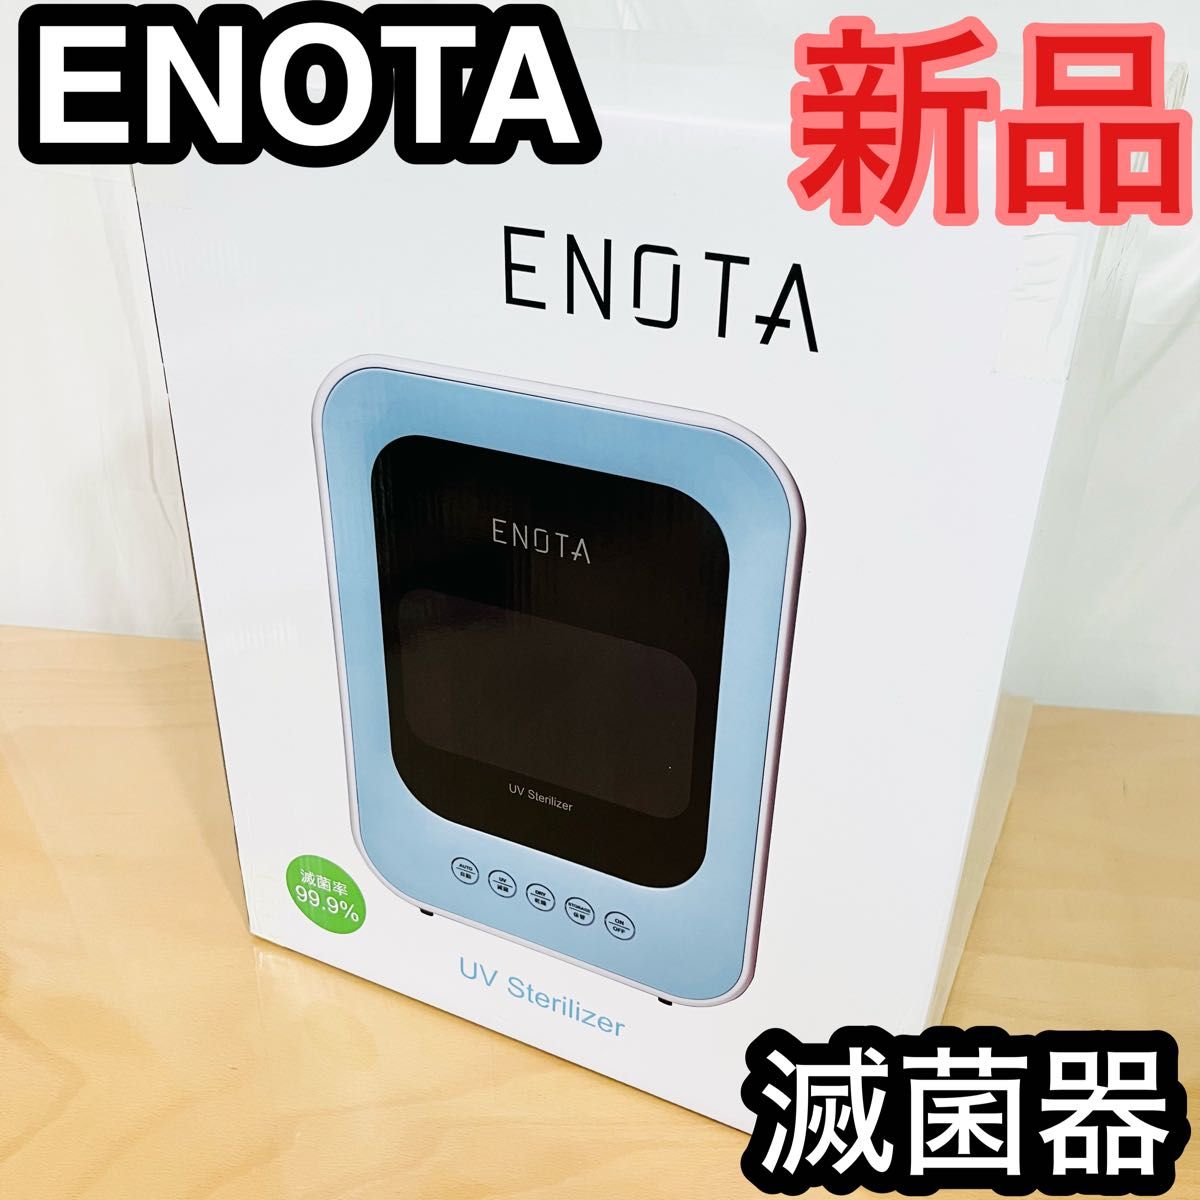 ENOTA 紫外線殺菌機 滅菌率99.9 UVランプ 消毒+熱風乾燥 2つの機能16 L大容量 殺菌線消毒保管庫 